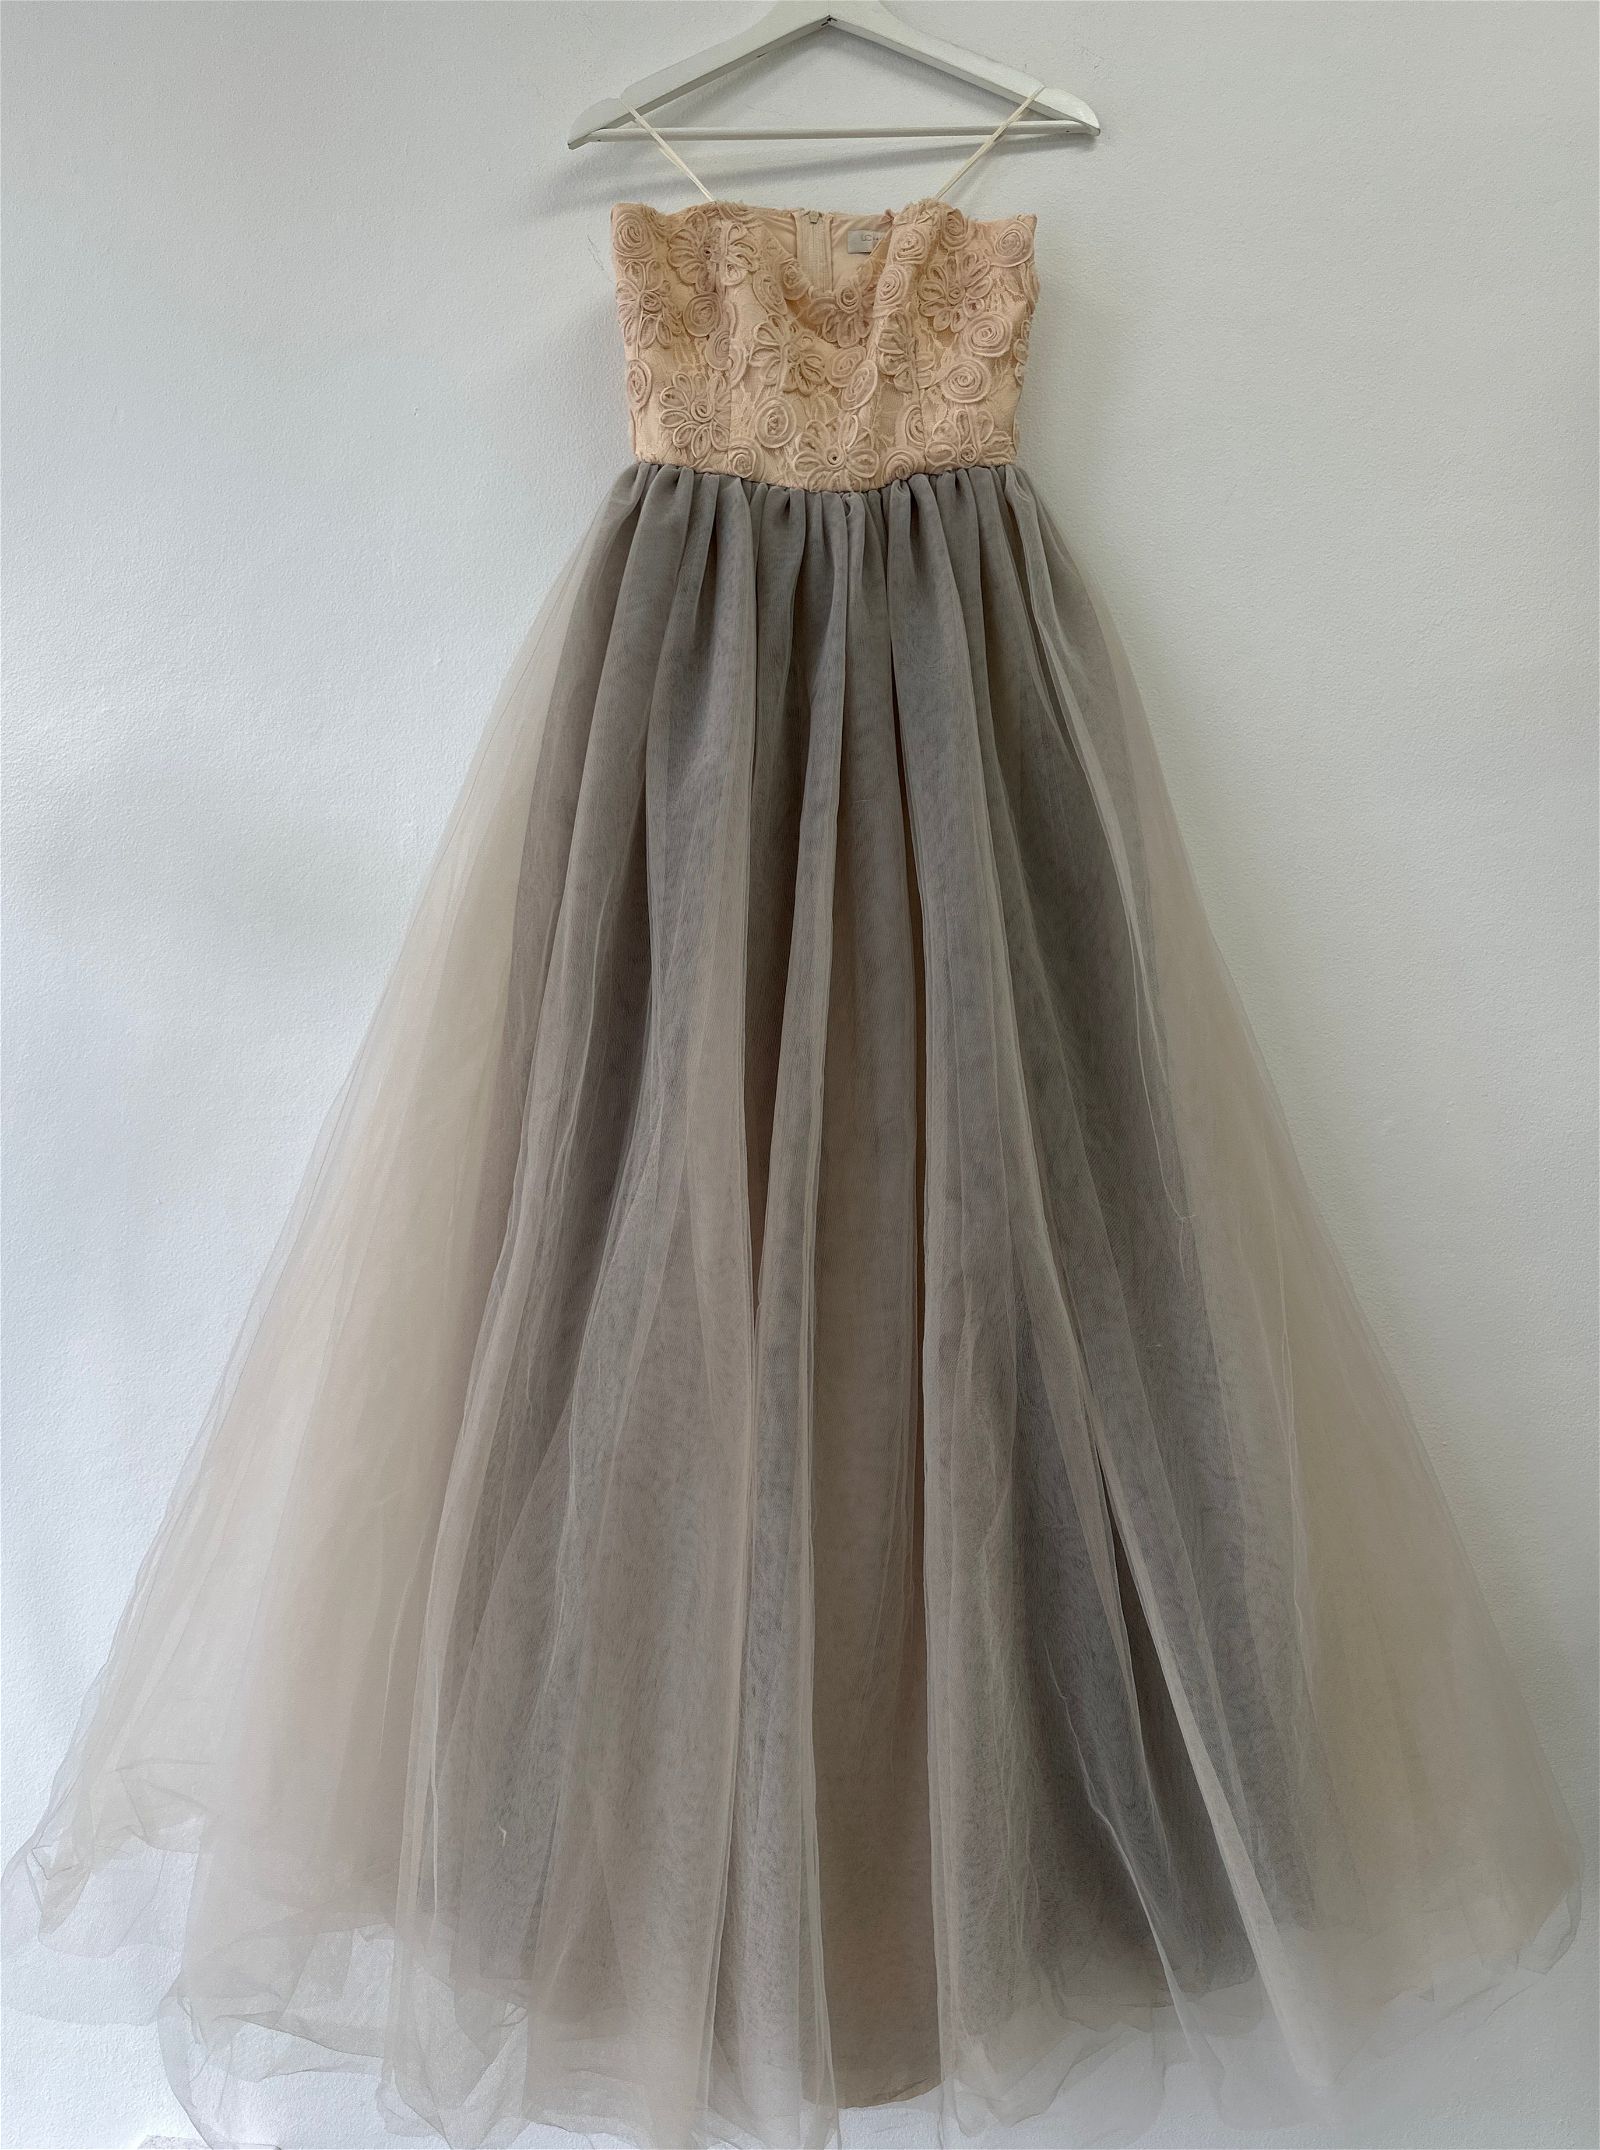 Lauren Conrad - Strapless Lavender Tulle Dress